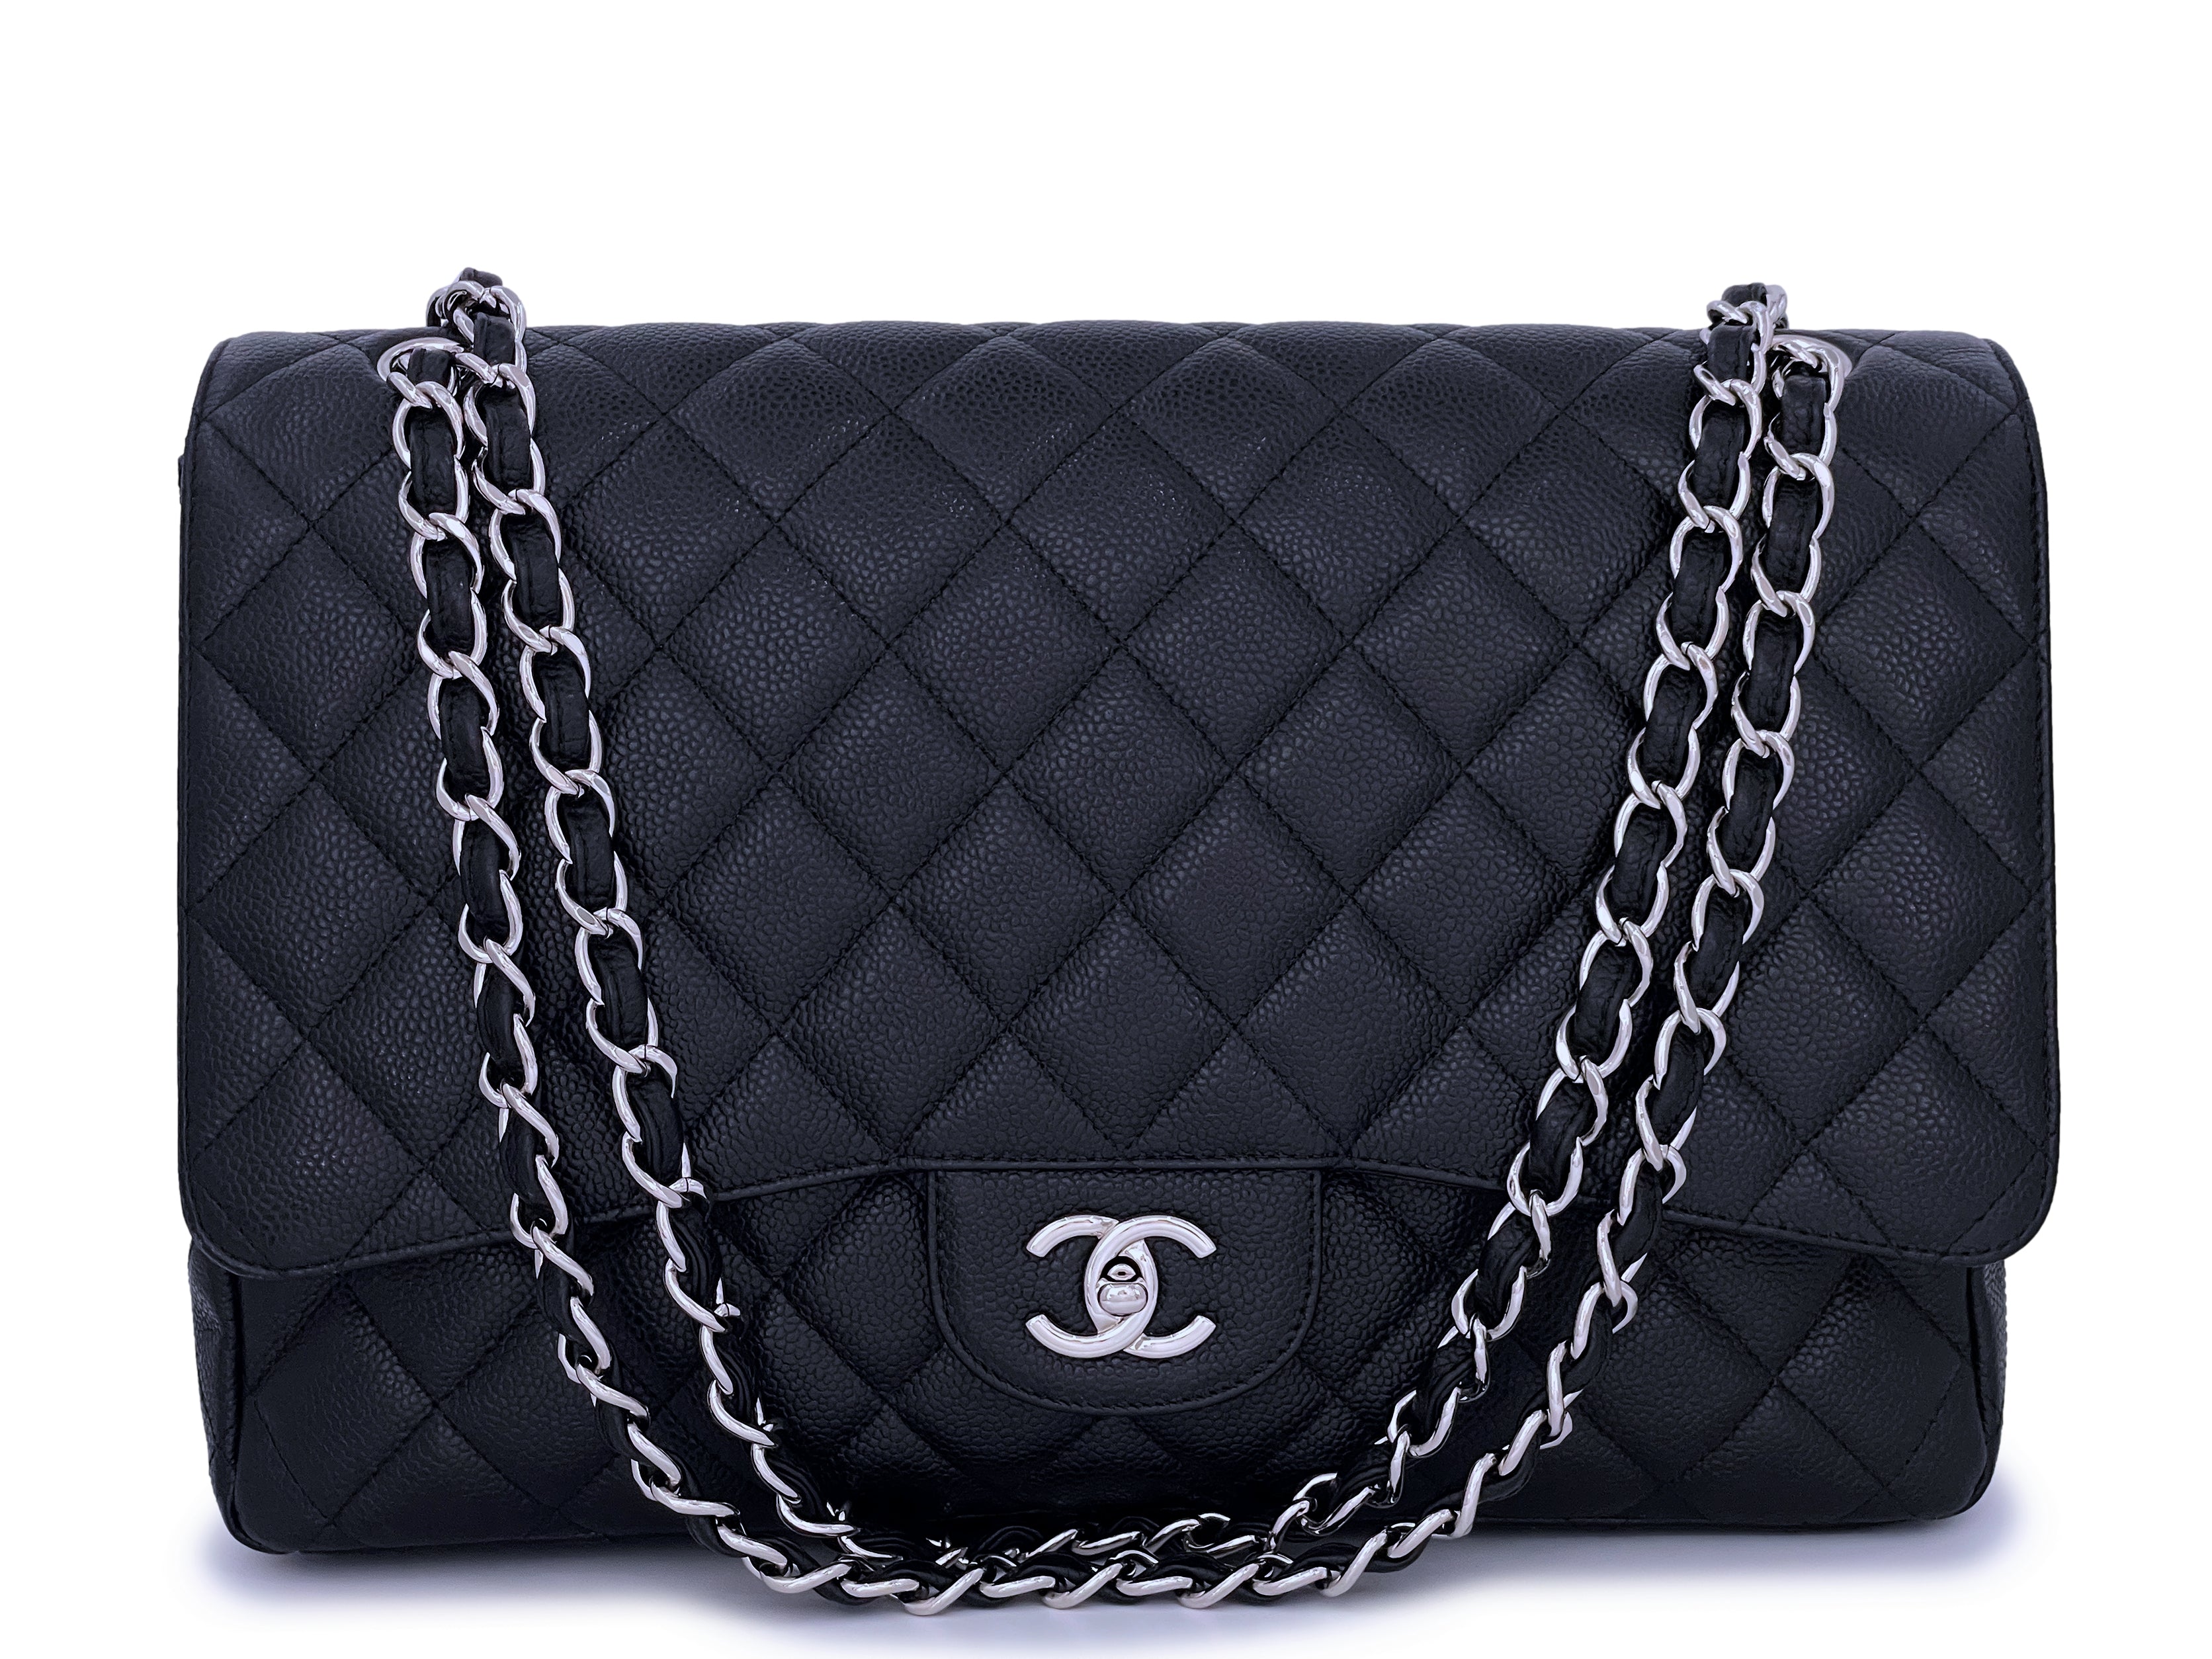 Chanel fabulous new SLG Black caviar O case & Clutch review! 